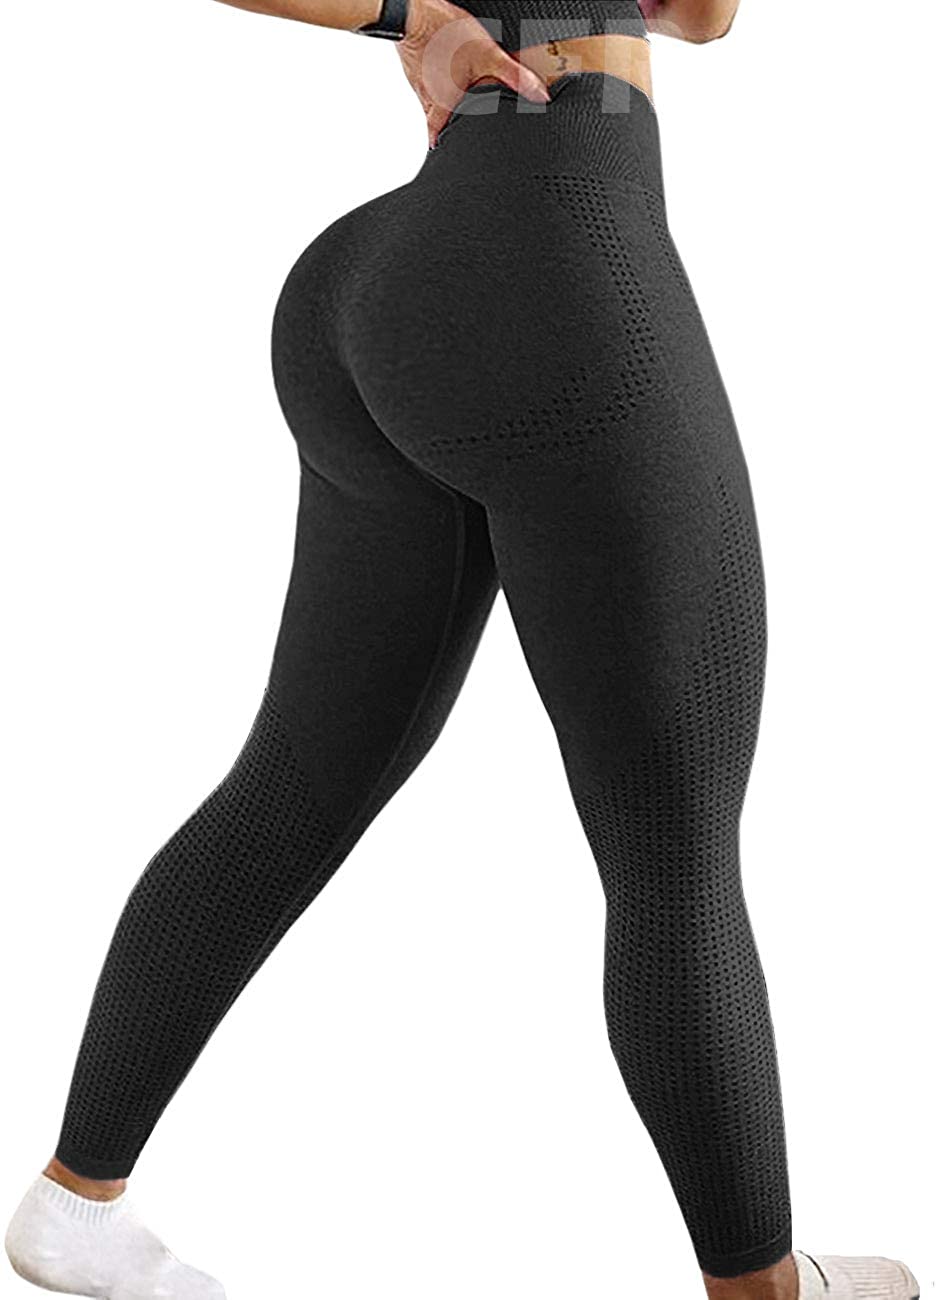 CHGBMOK Yoga Pants for Women Fitness Sports Stretch High Waist